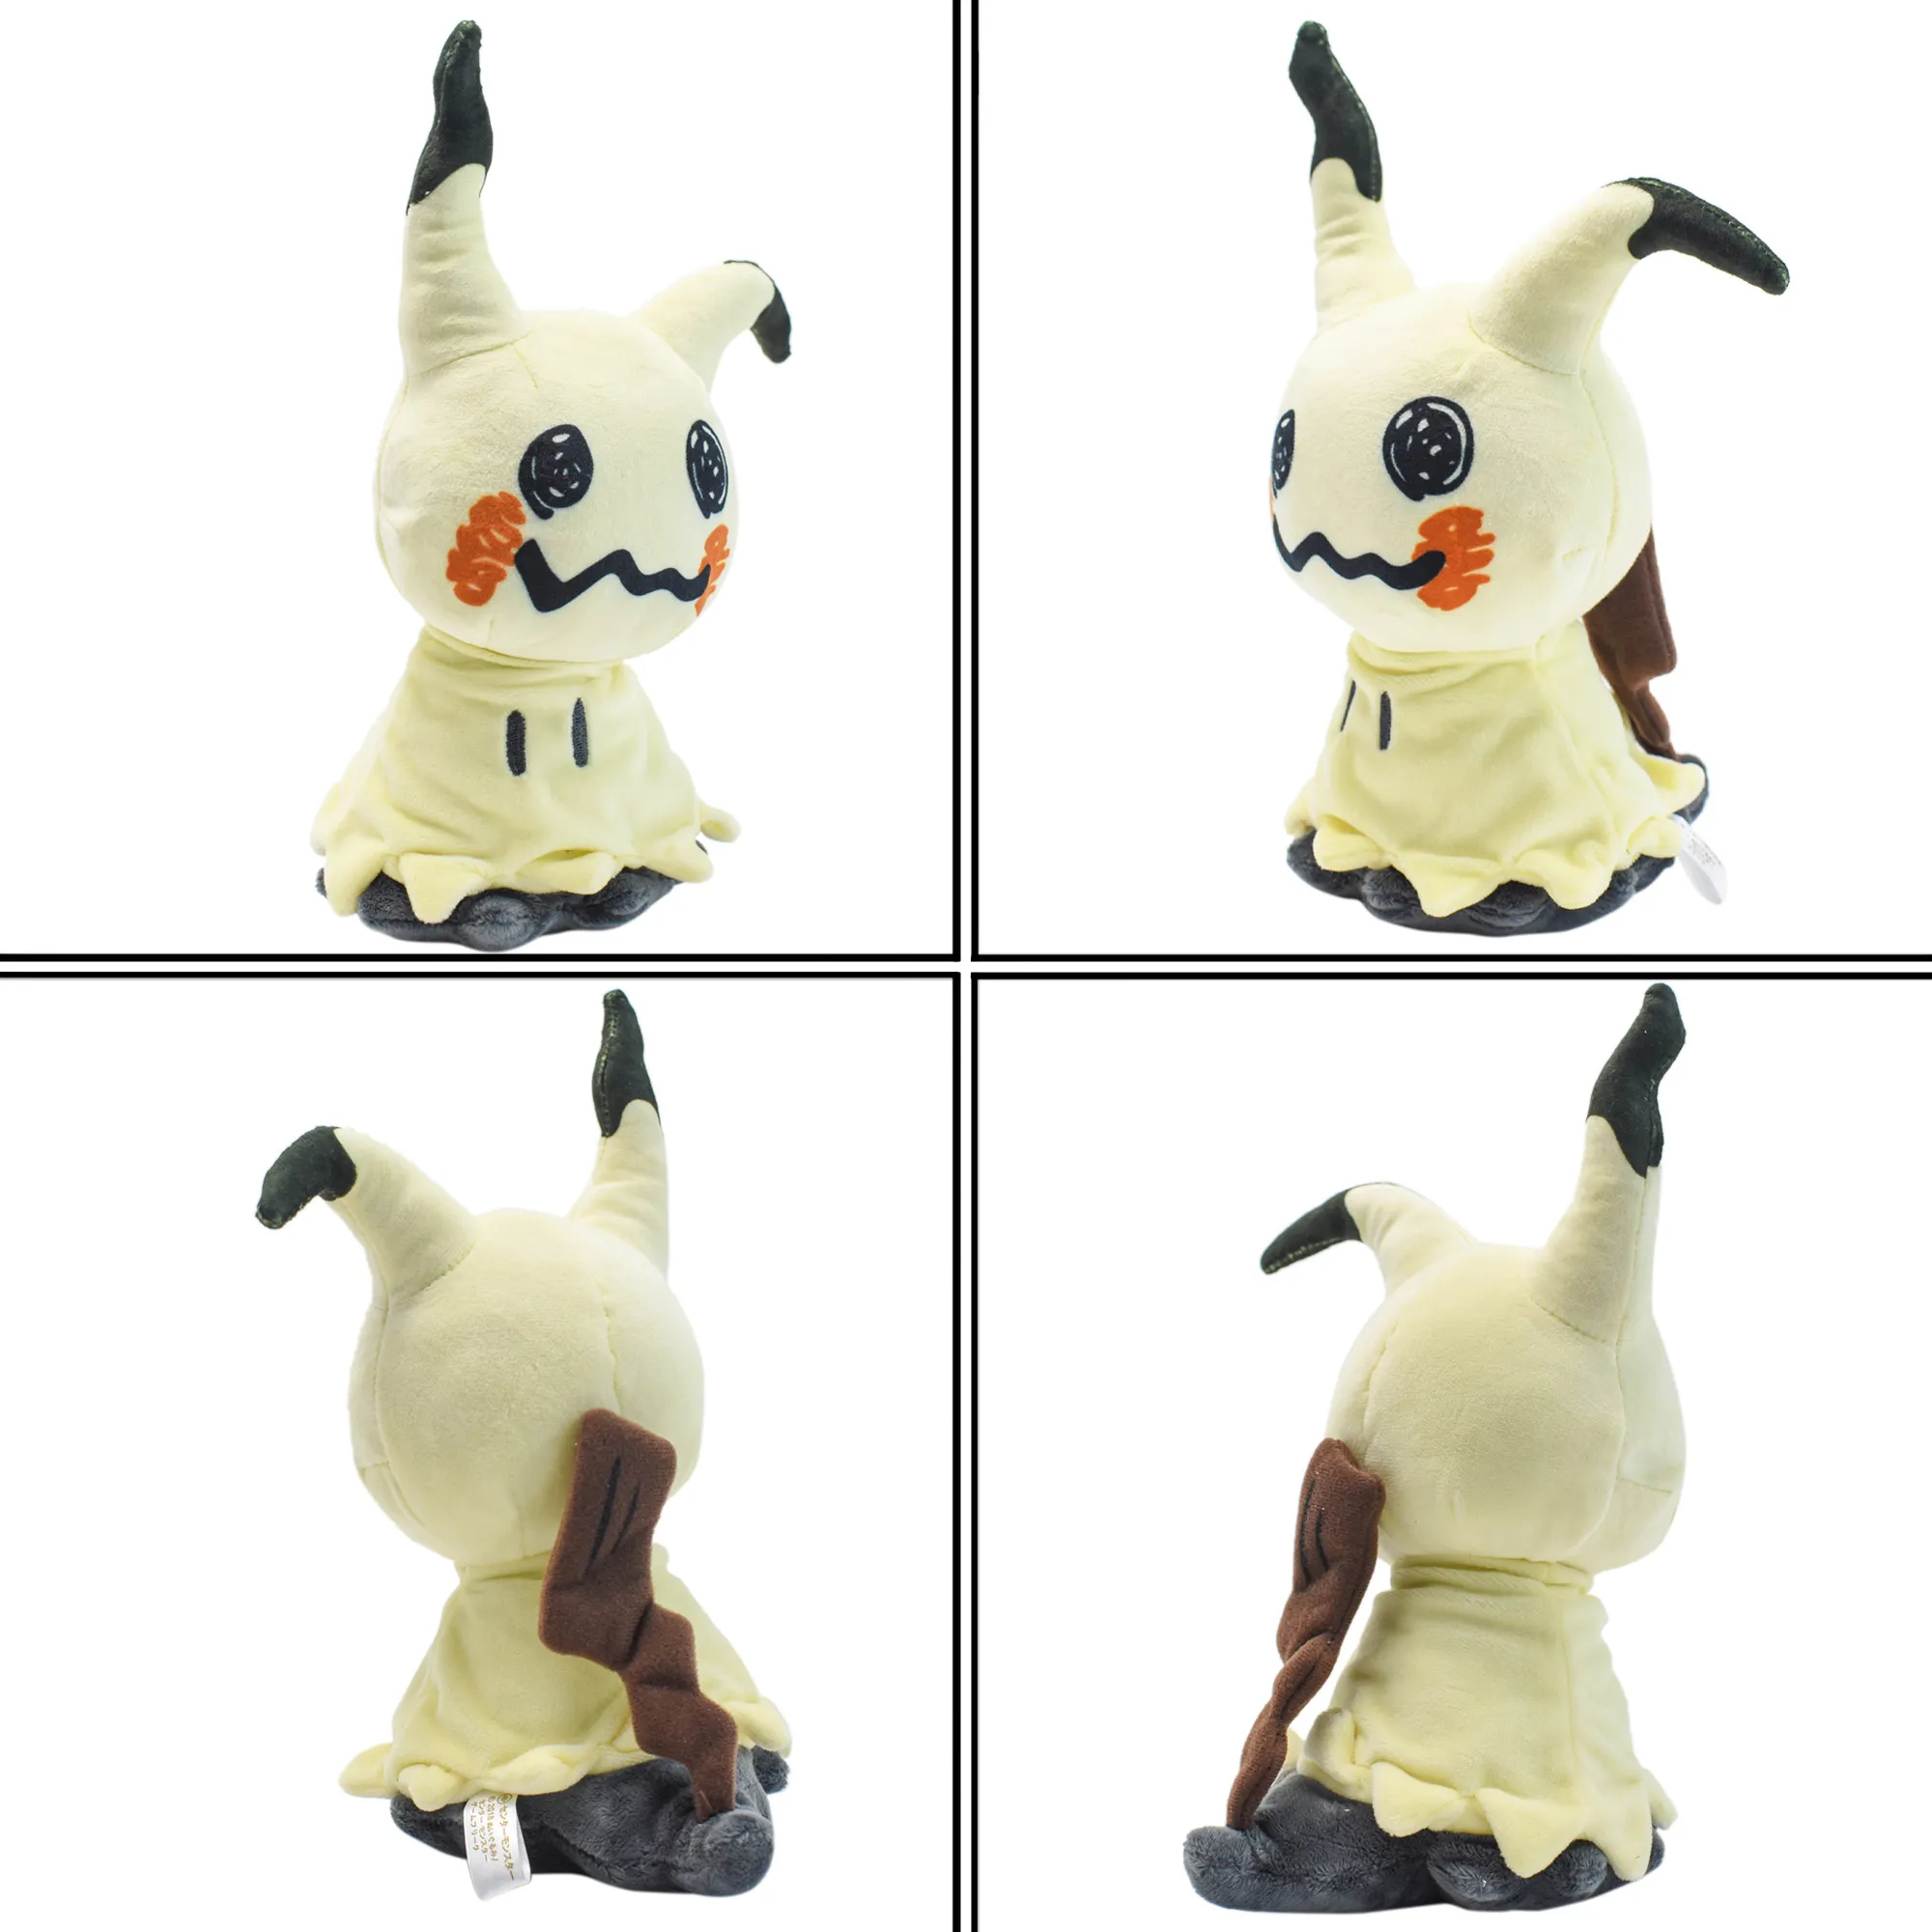 Mimikyu Pokemon Plush Doll Soft Animal Hot Toys Great Gift For Kids Free Shipping 23CM - Mimikyu Plush